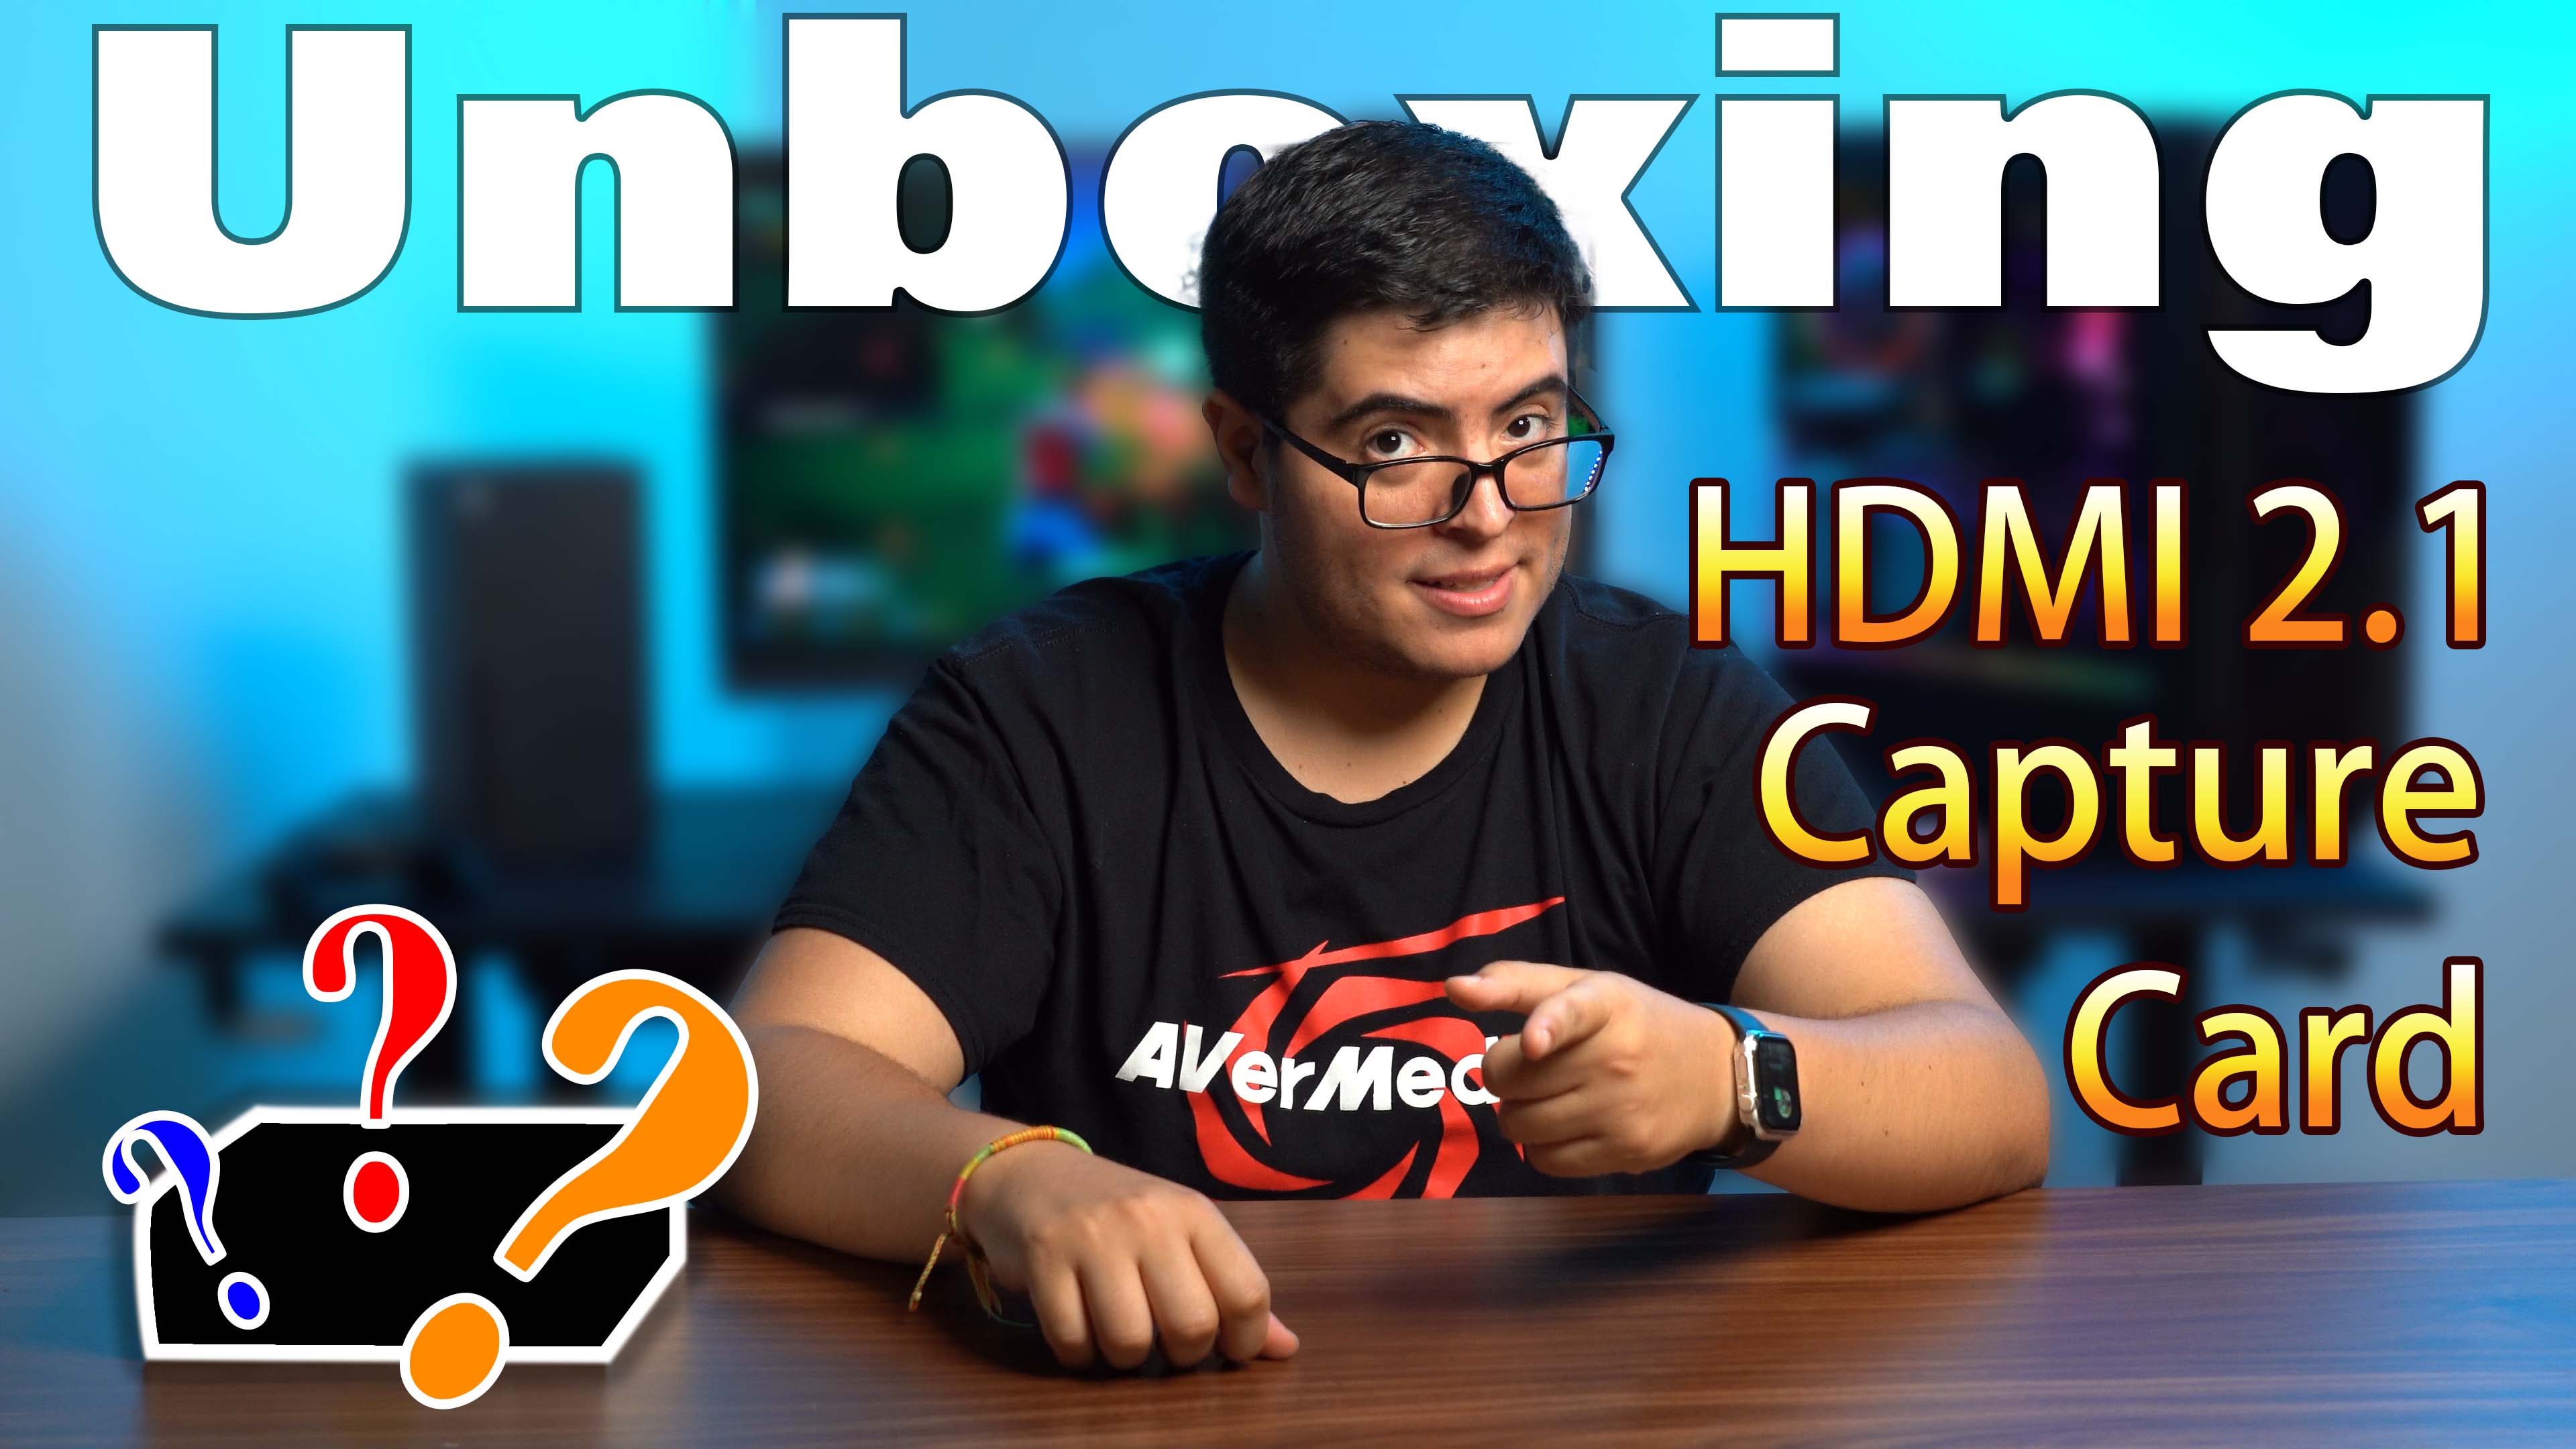 Load video: AVerMedia GC553G2 HDMI 2.1 captur card